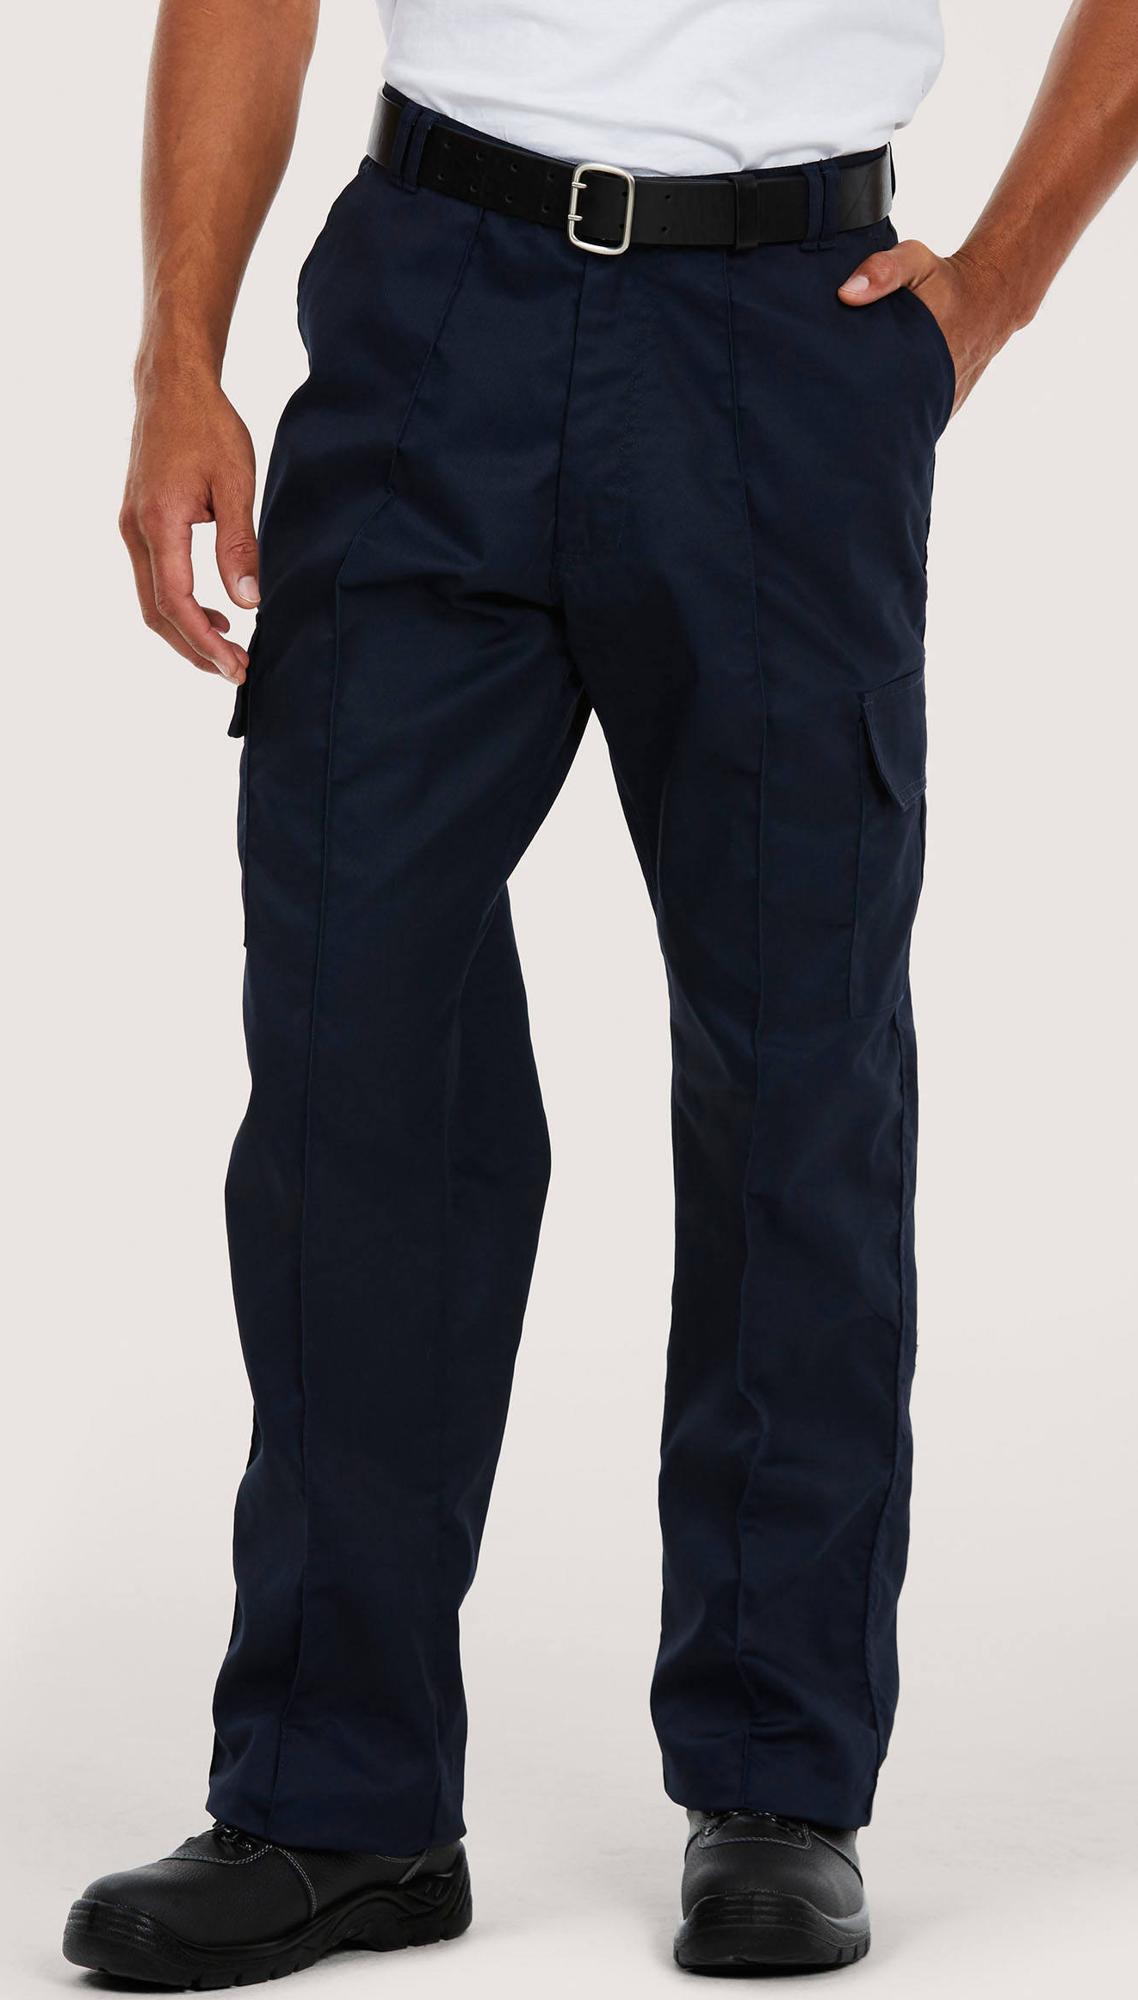 UC905  Ladies Cargo Trousers 245 GSM  Navy  Ladies Size 8   Amazoncouk Fashion